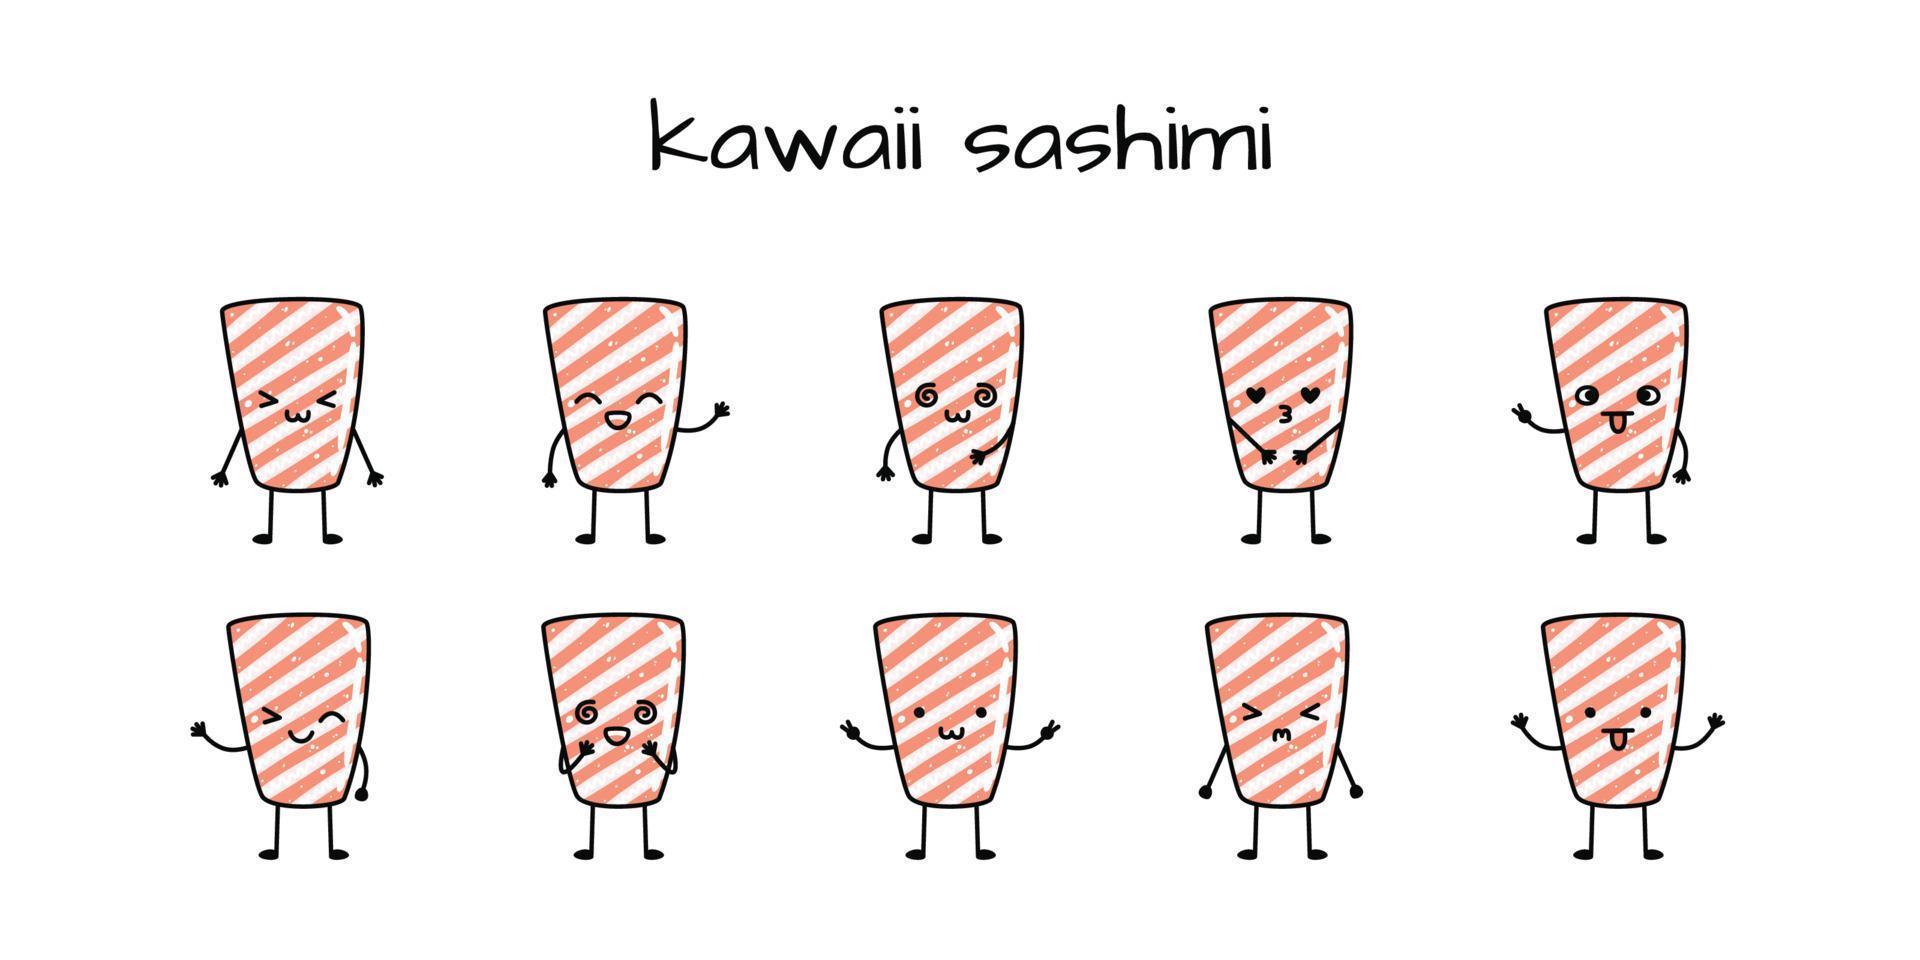 impostato di kawaii sashimi Sushi mascotte nel cartone animato stile vettore